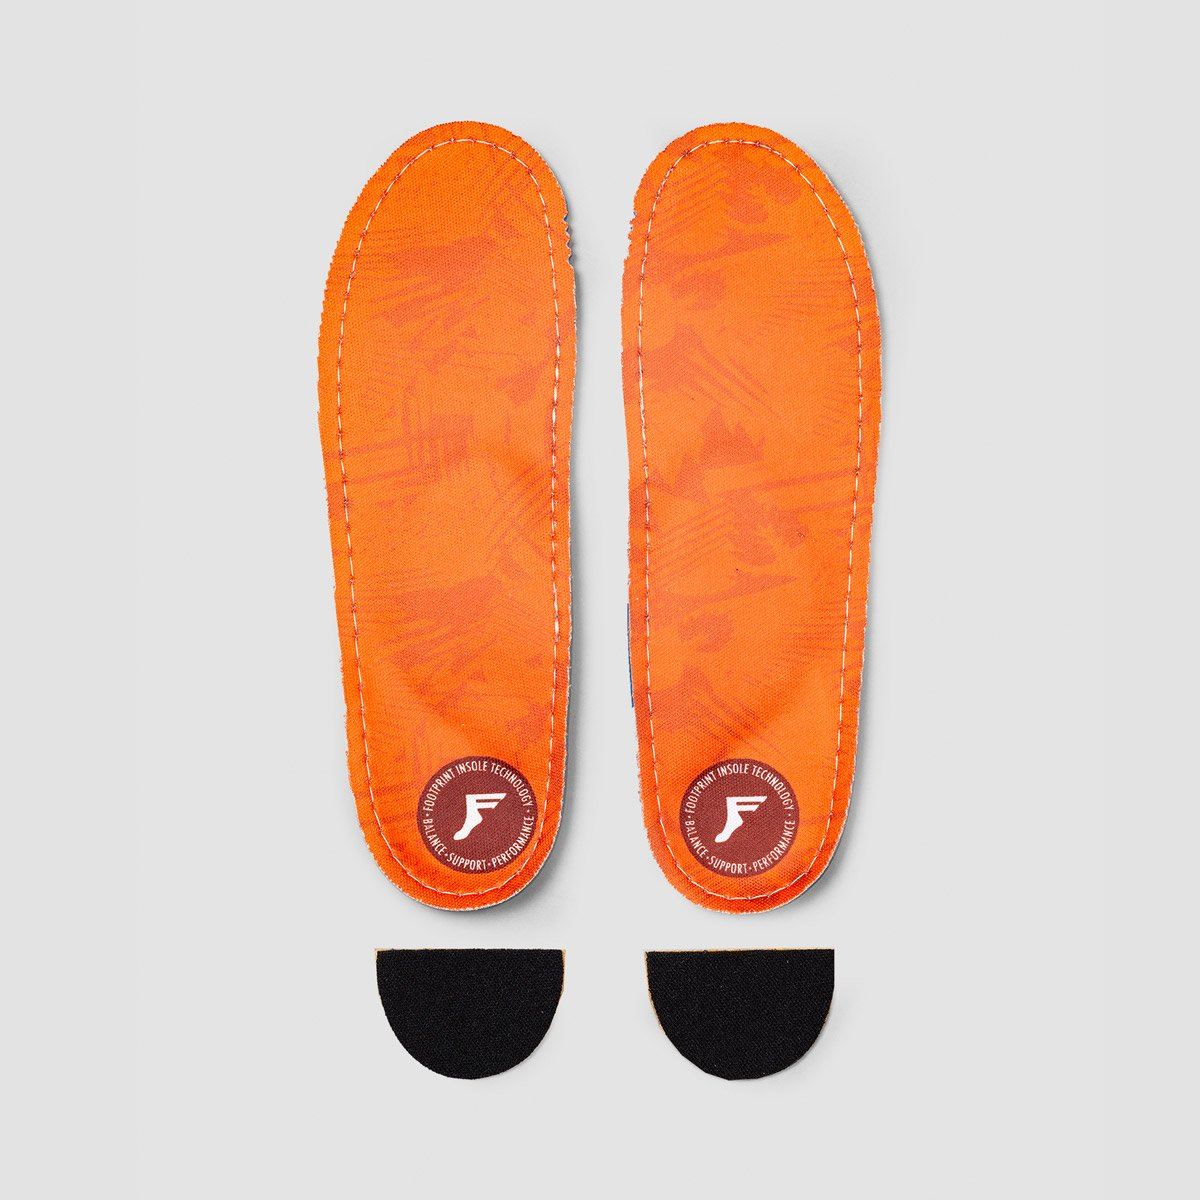 Footprint Kingfoam Orthotic Insoles Orange Camo